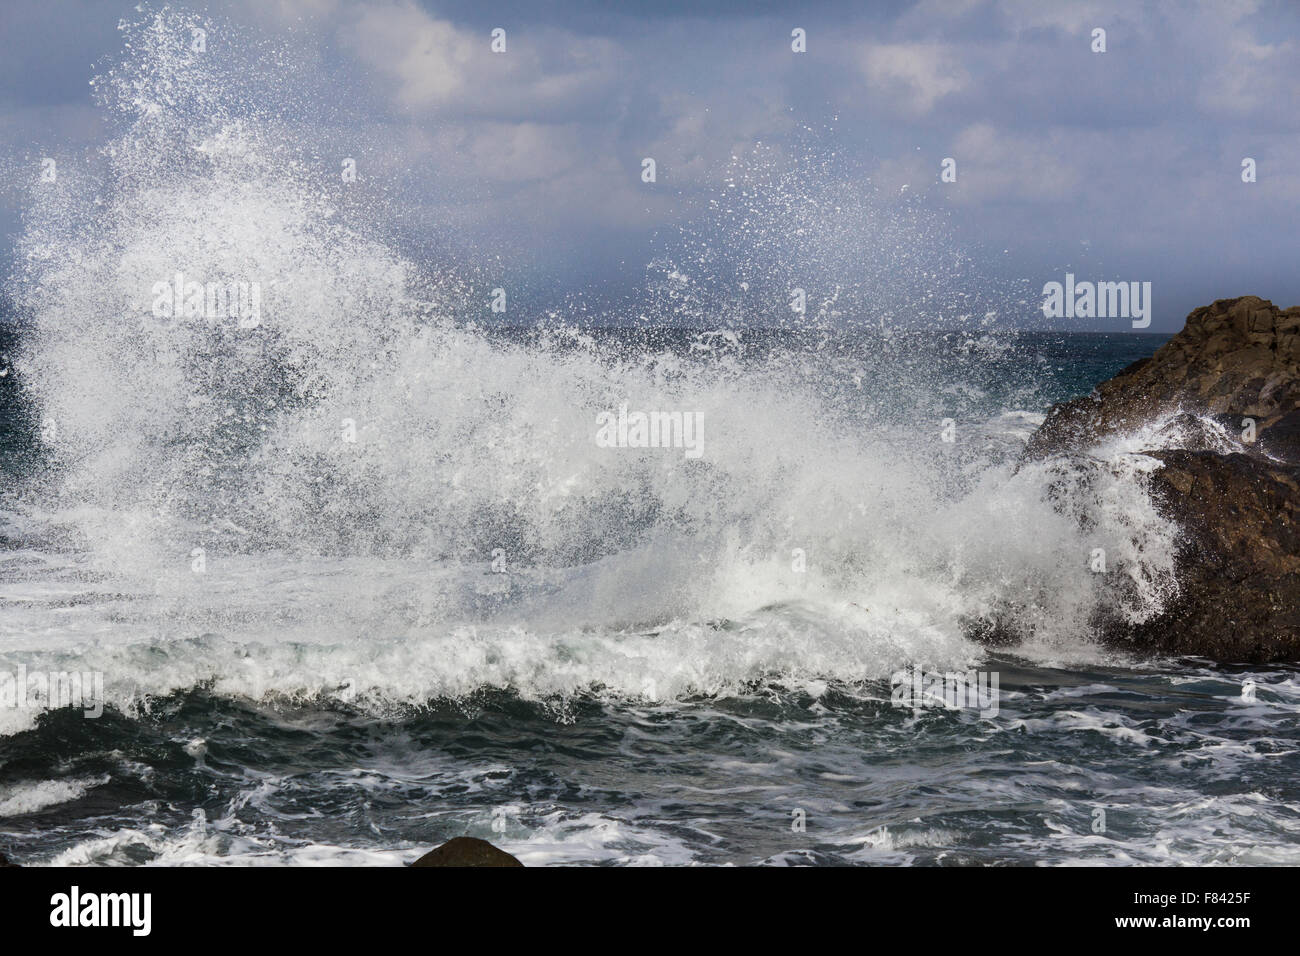 big wave splashing on rock -  waves breaking on shore Stock Photo